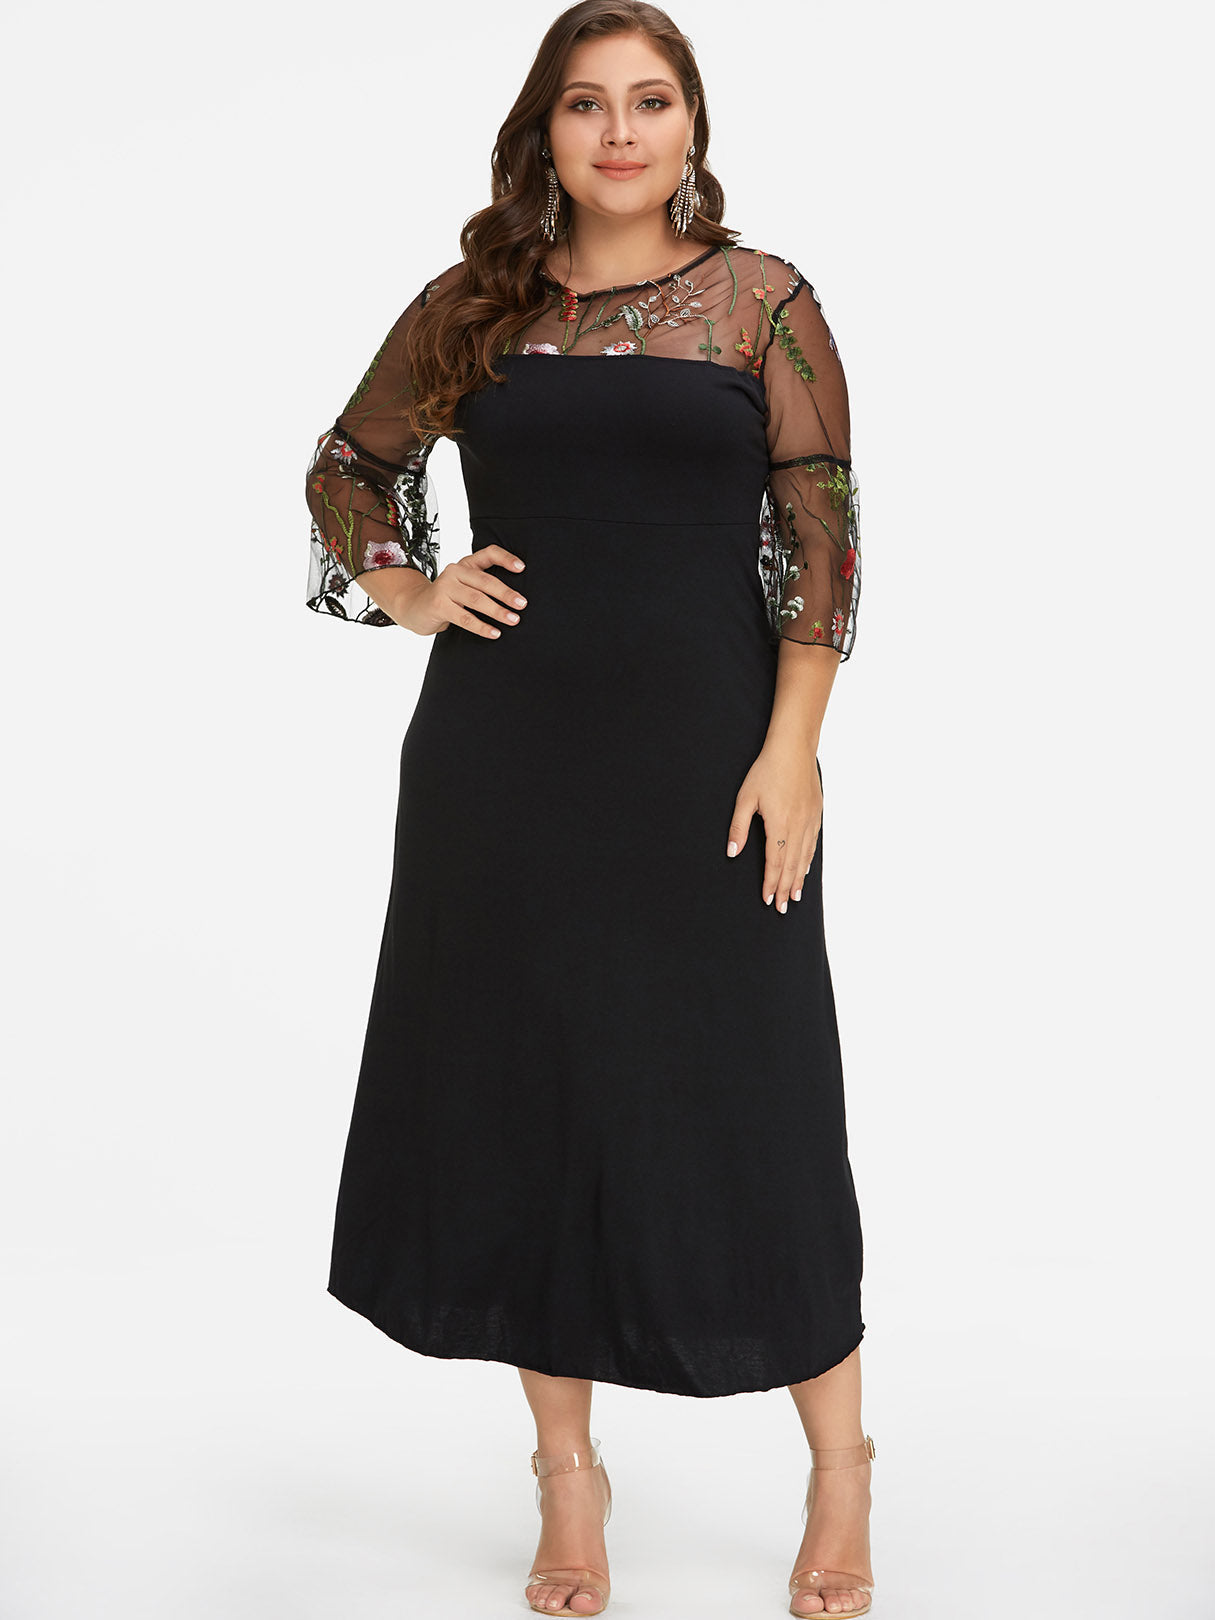 Wholesale Round Neck Lace See Through 3/4 Sleeve Black Plus Size Dress